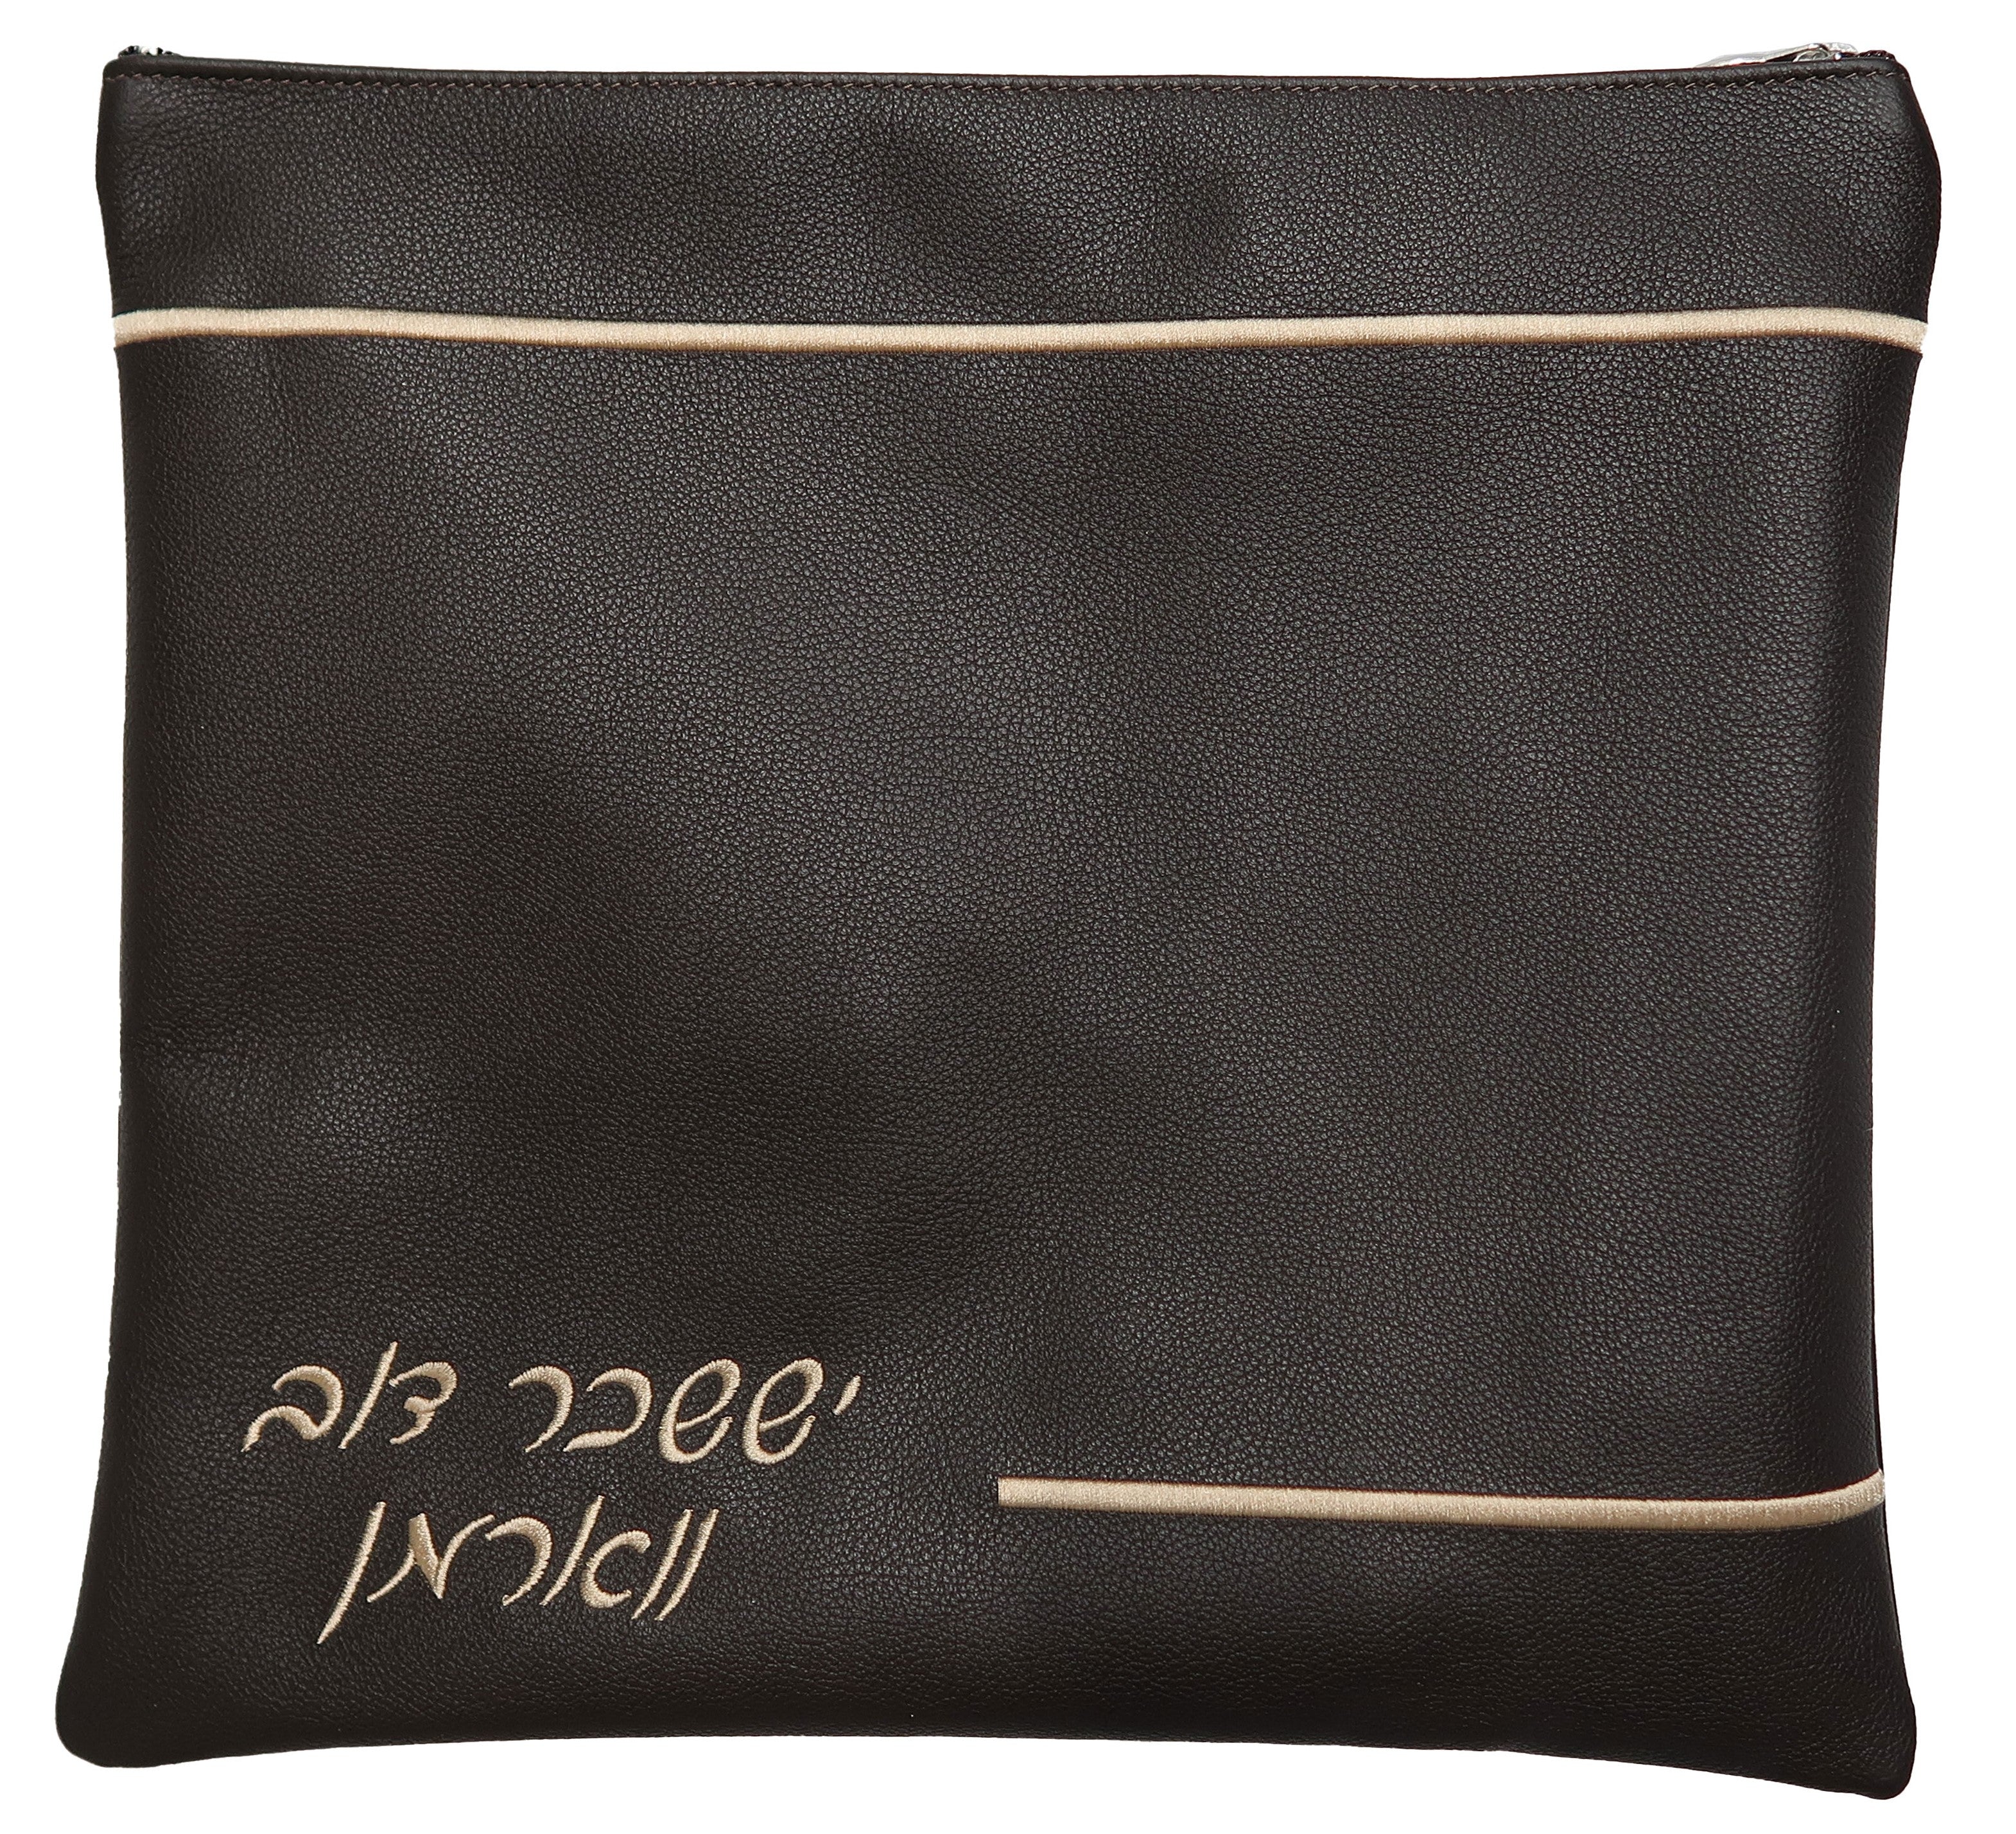 Brown leather Simple Stripe Tallis and Tefilin bag